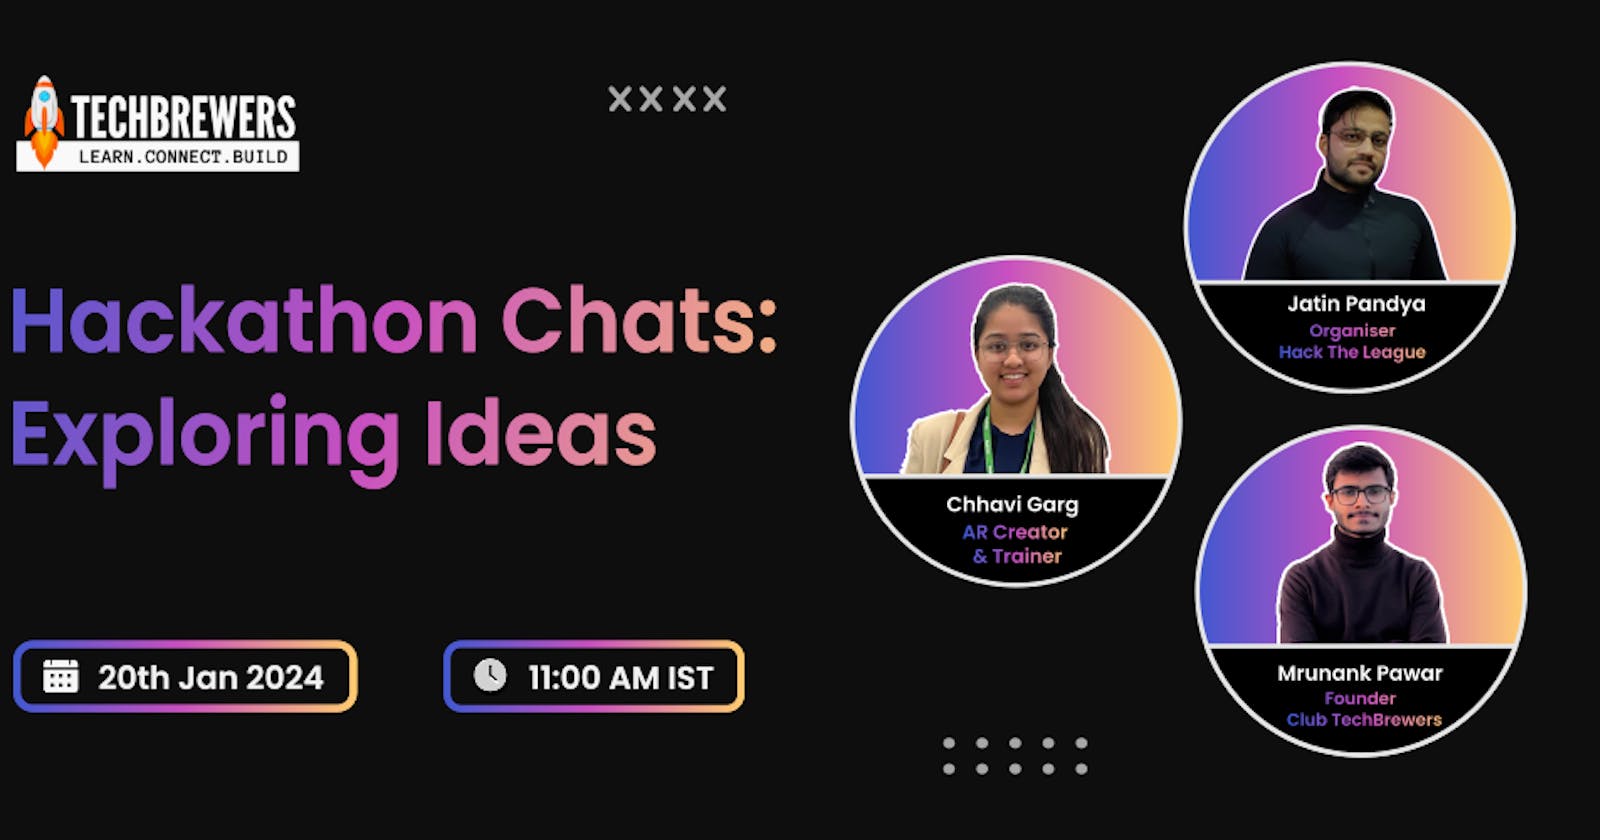 Hackathon Chats: Exploring Ideas